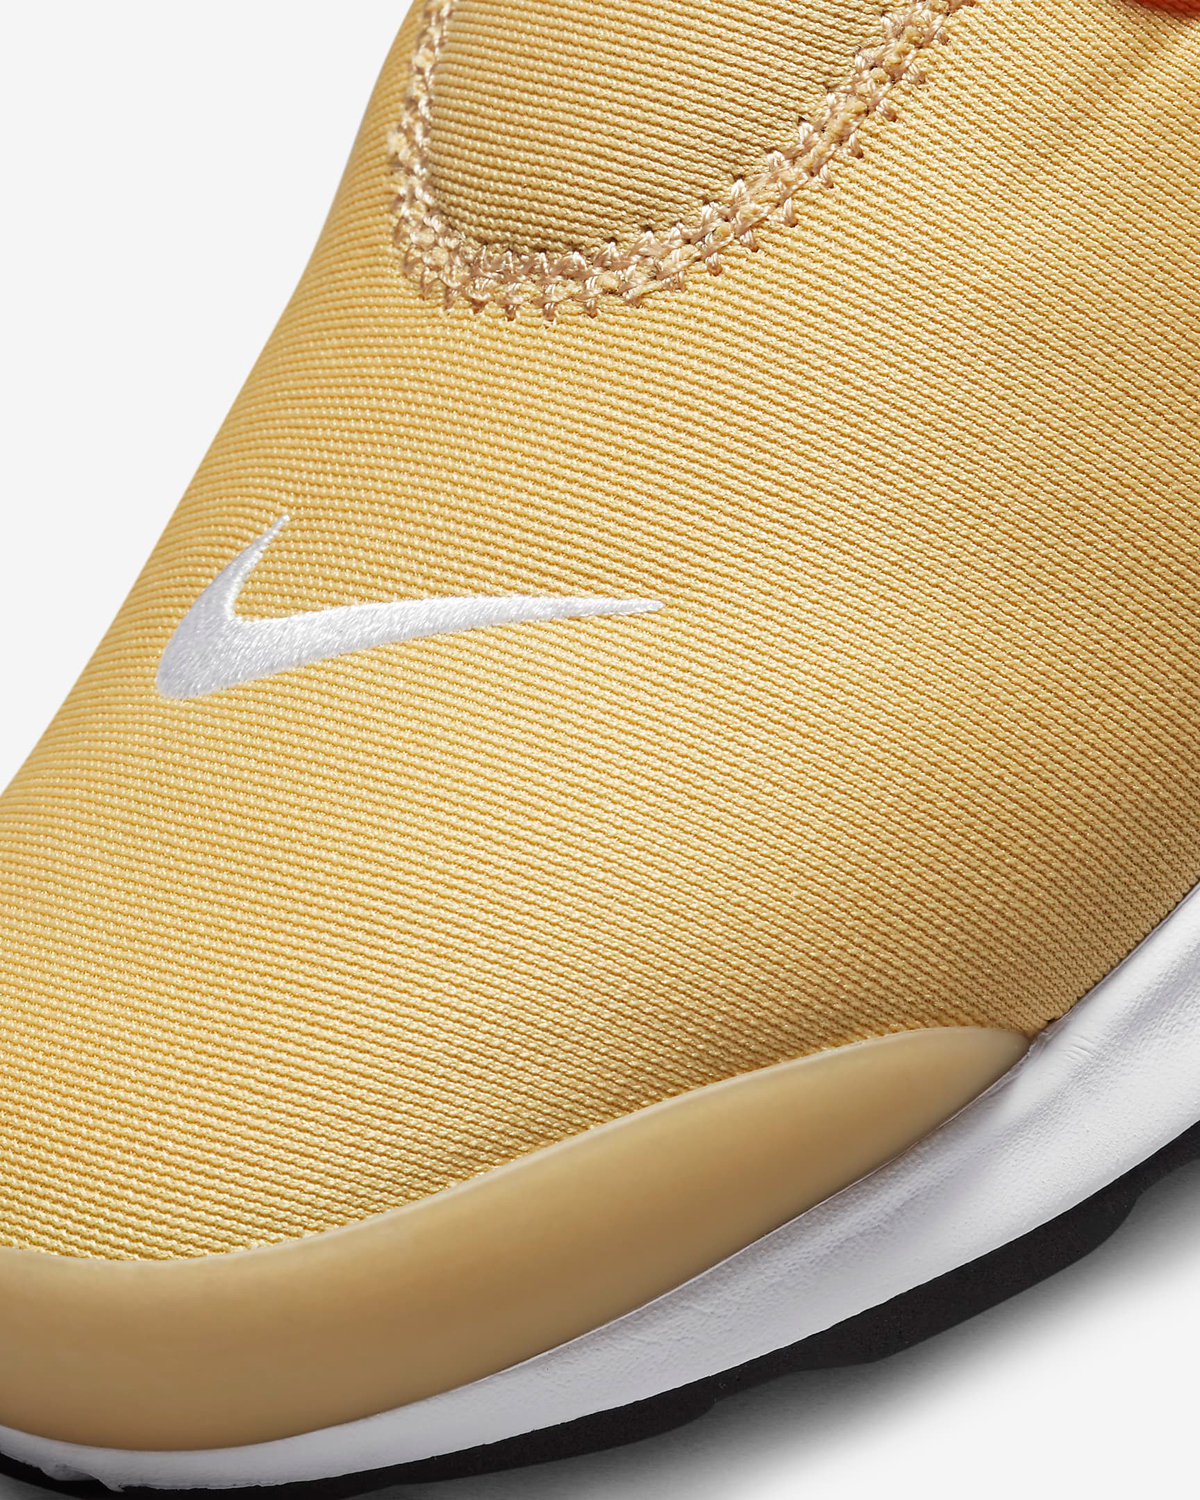 Nike-Air-Presto-Sesame-Bright-Mandarin-7